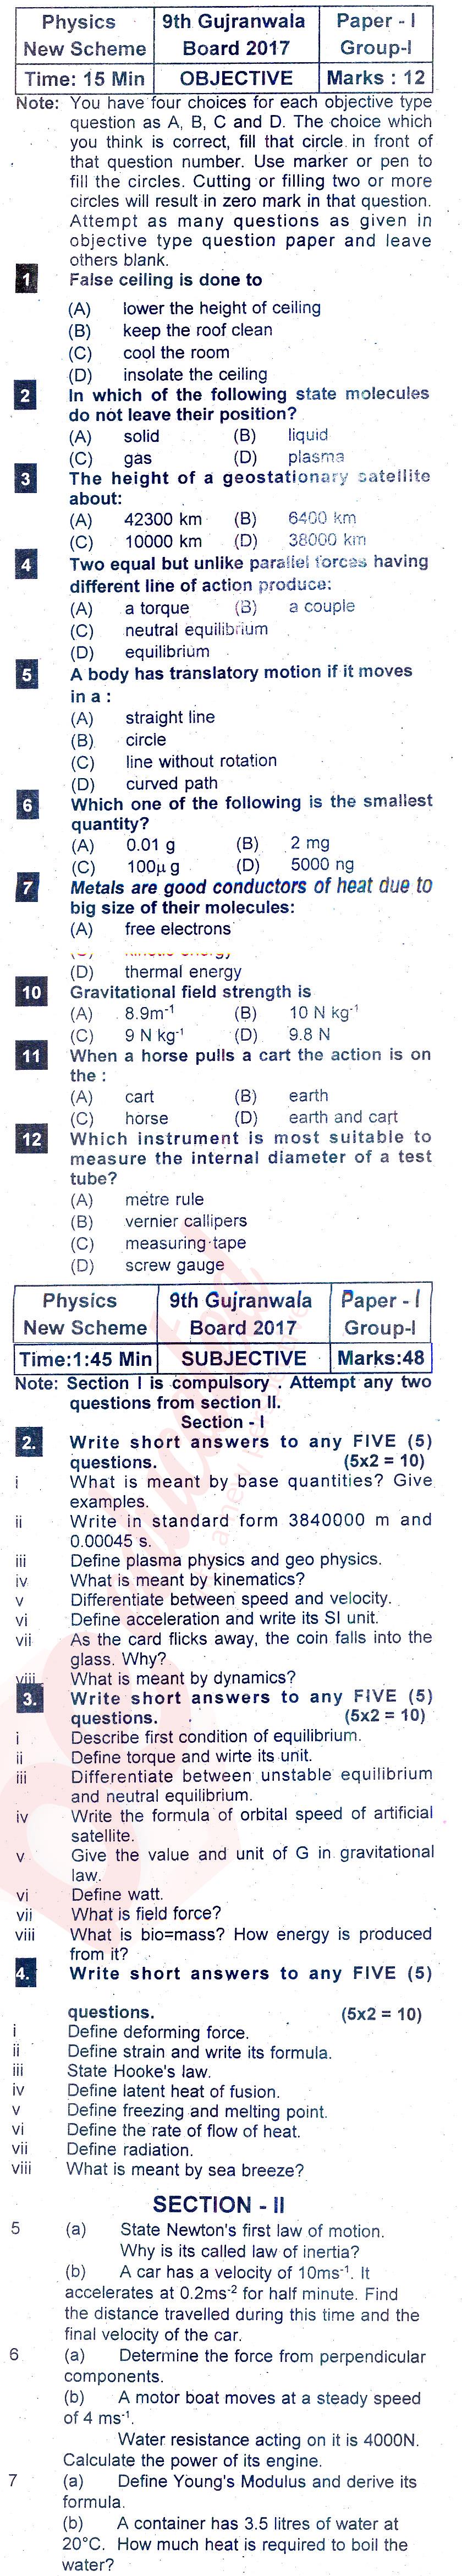 Physics 9th English Medium Past Paper Group 1 BISE Gujranwala 2017